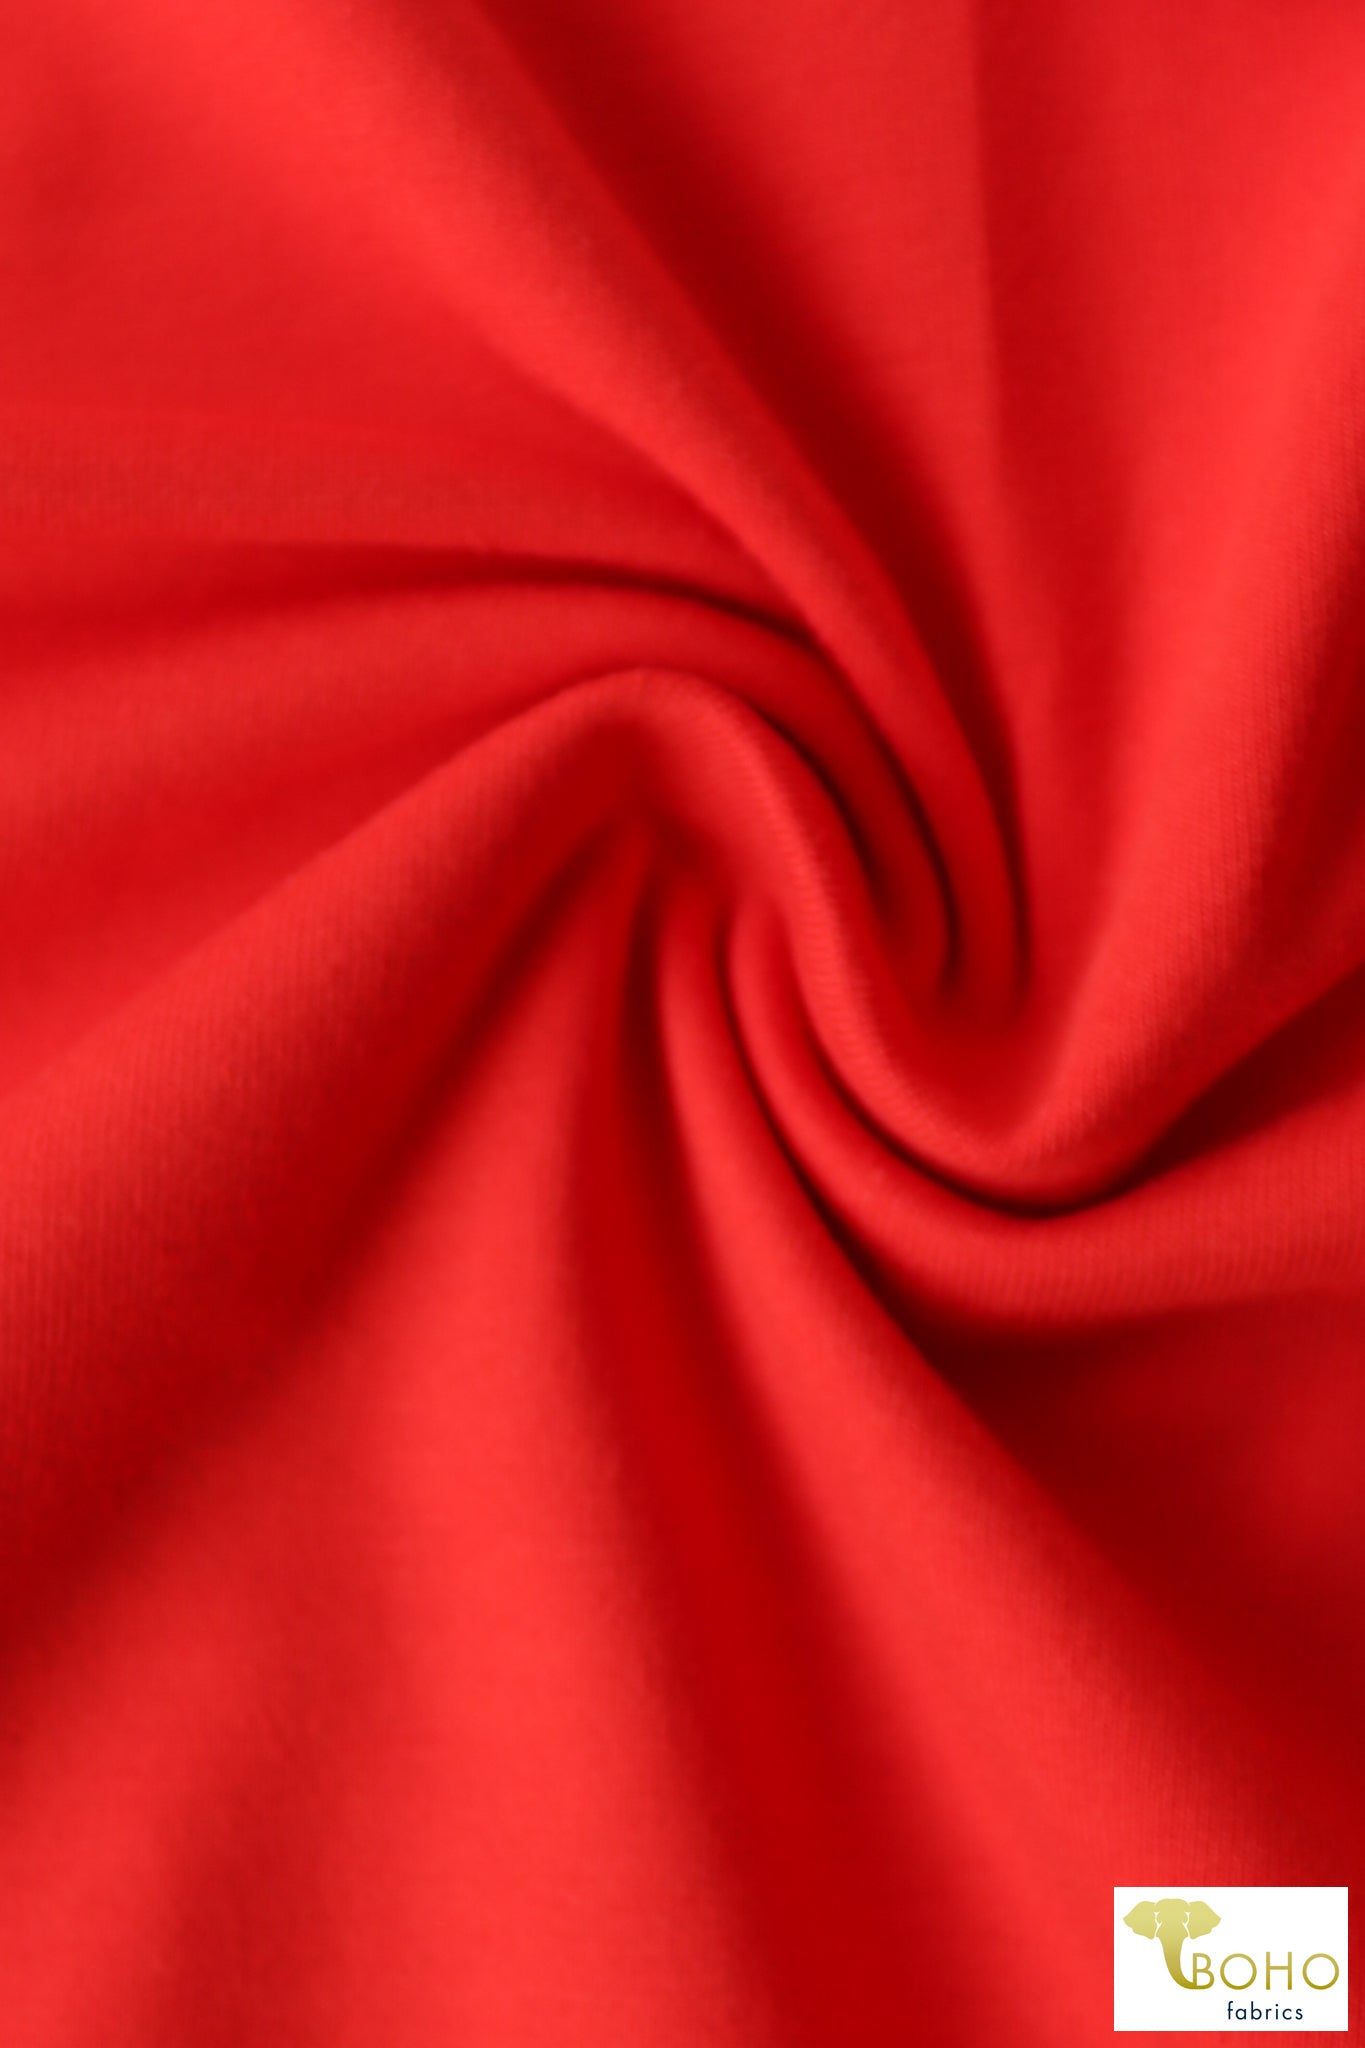 Crimson Red, Cotton Spandex Knit, 10 oz. - Boho Fabrics